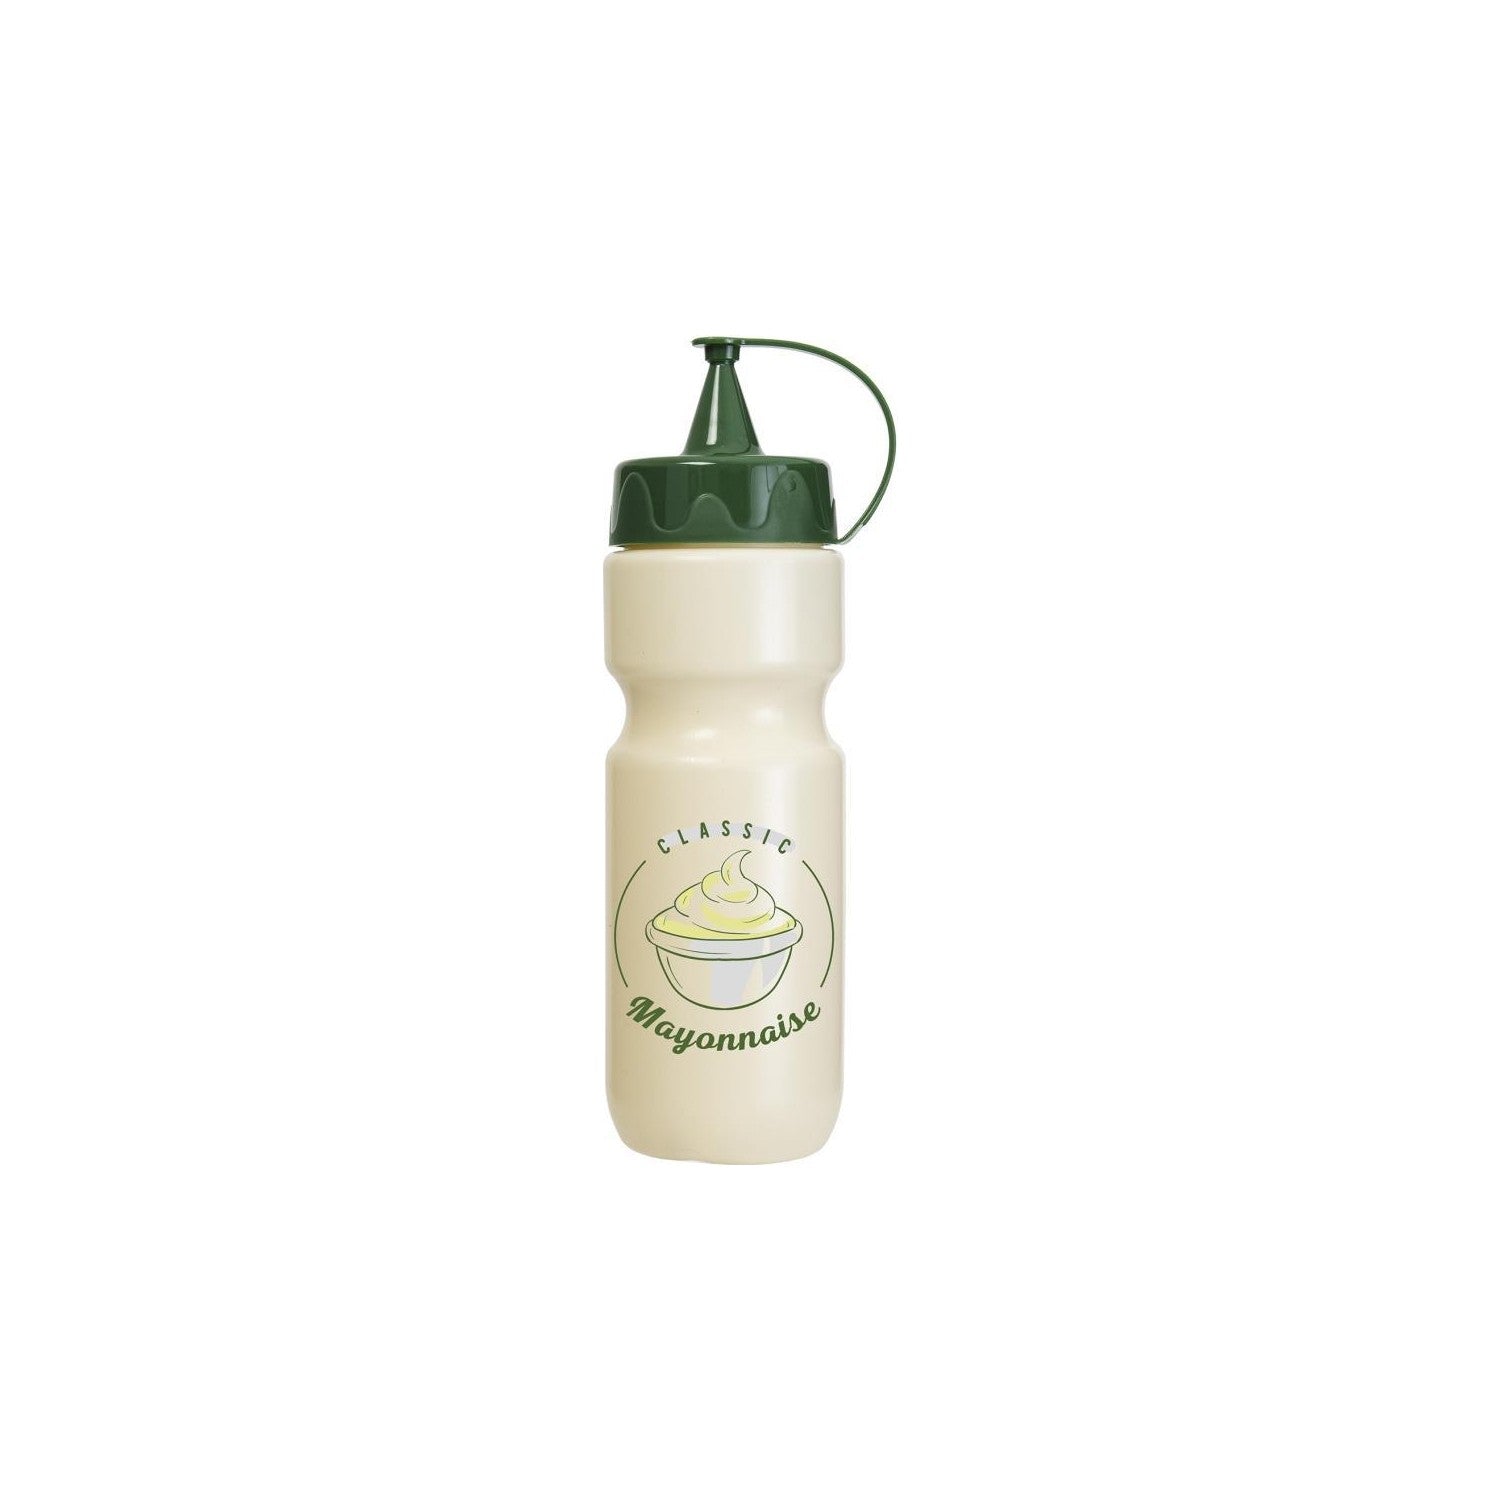 Herevin Patterned Mayonnaise Bottle 660 ml (Net)